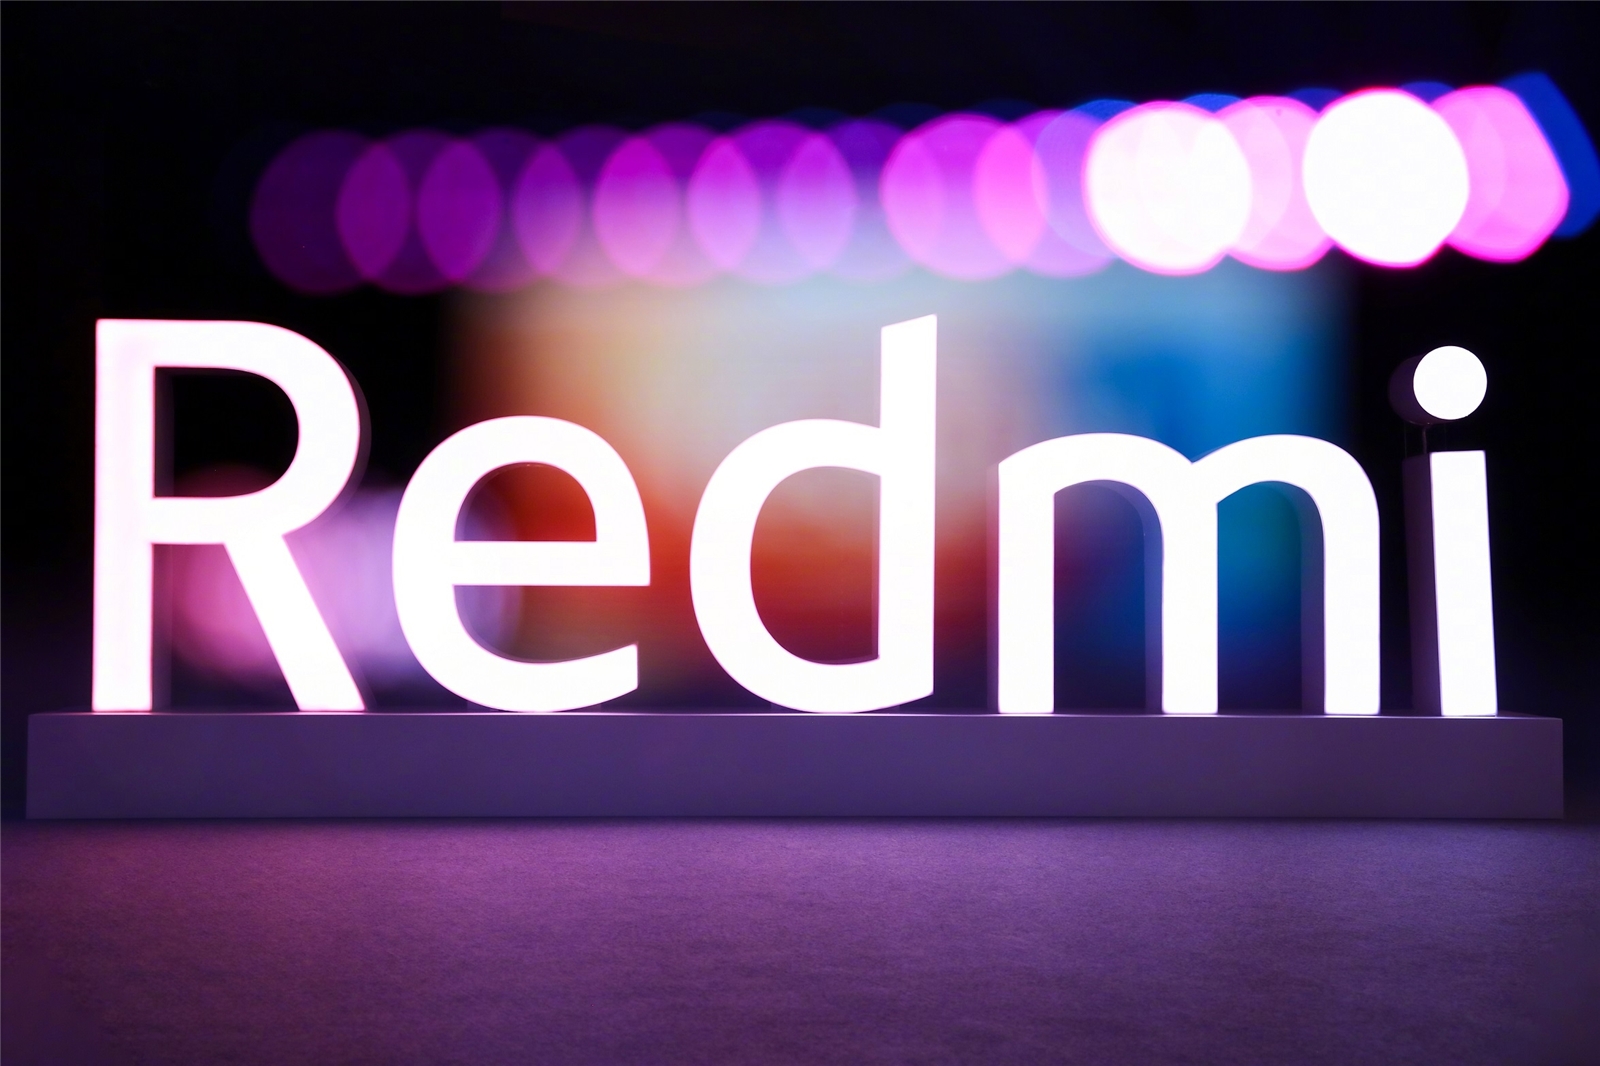 Redmi Note 11系列官宣：外形大改、极致性价比